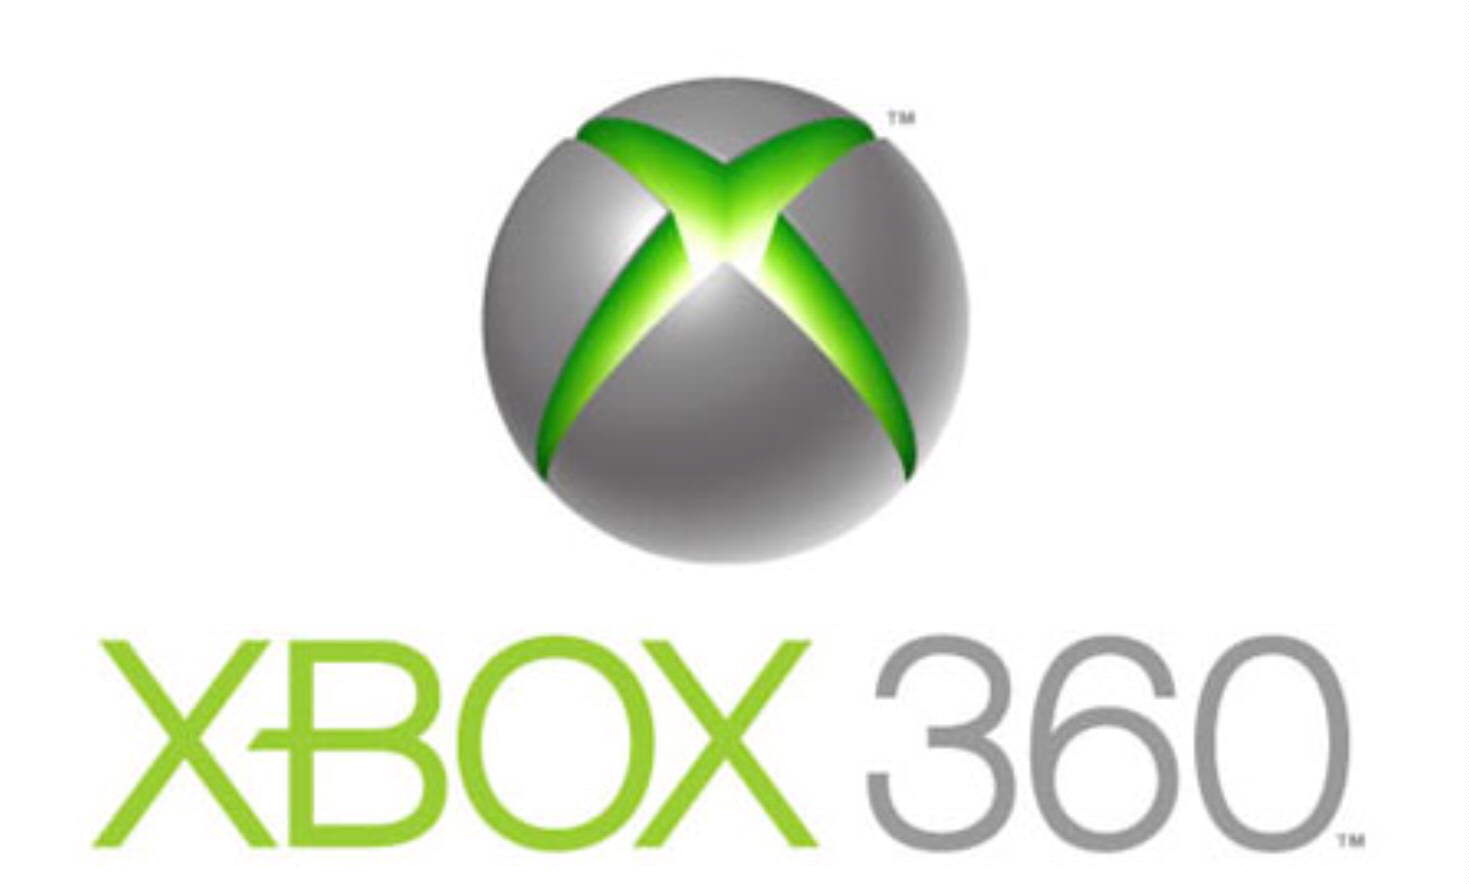 Yenilenmiş Xbox 360